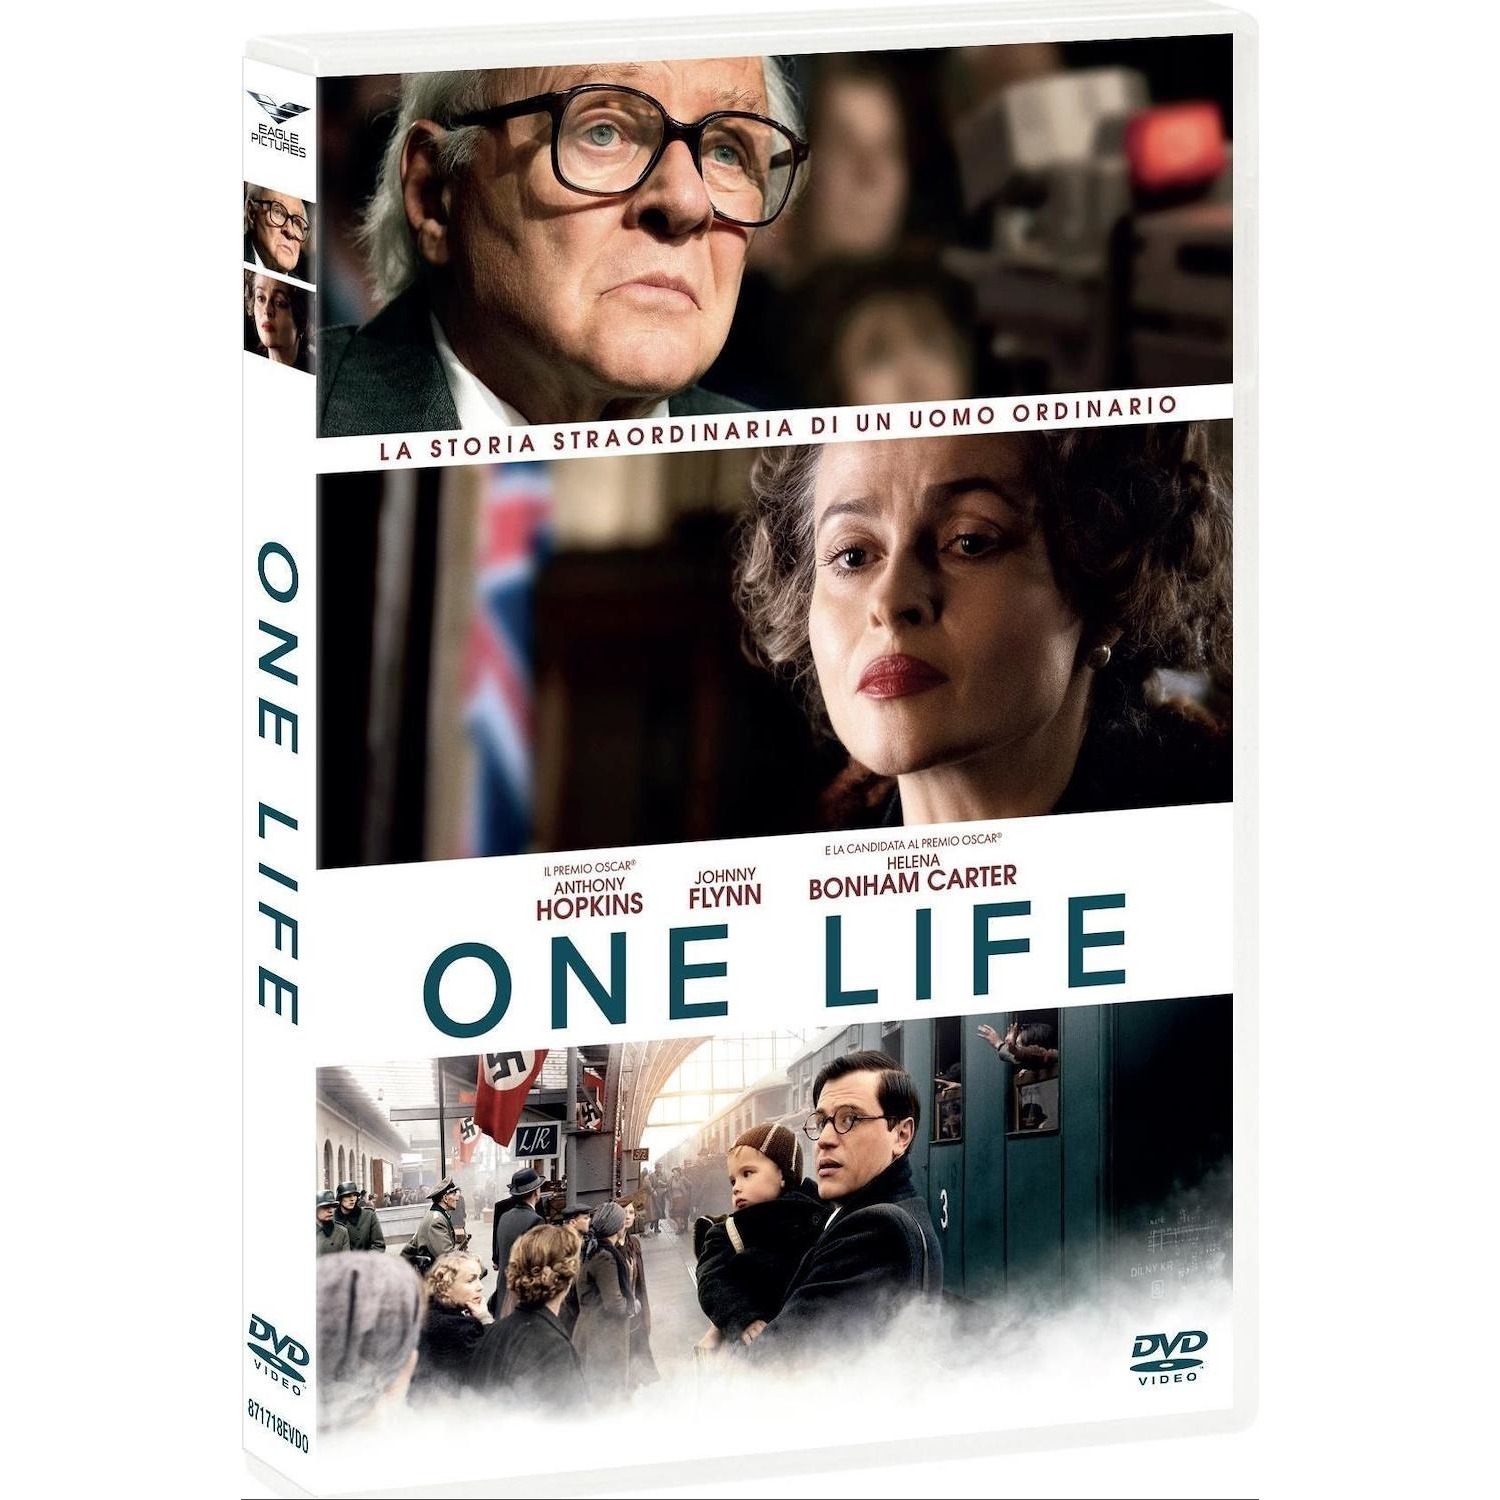 Immagine per DVD One Life da DIMOStore